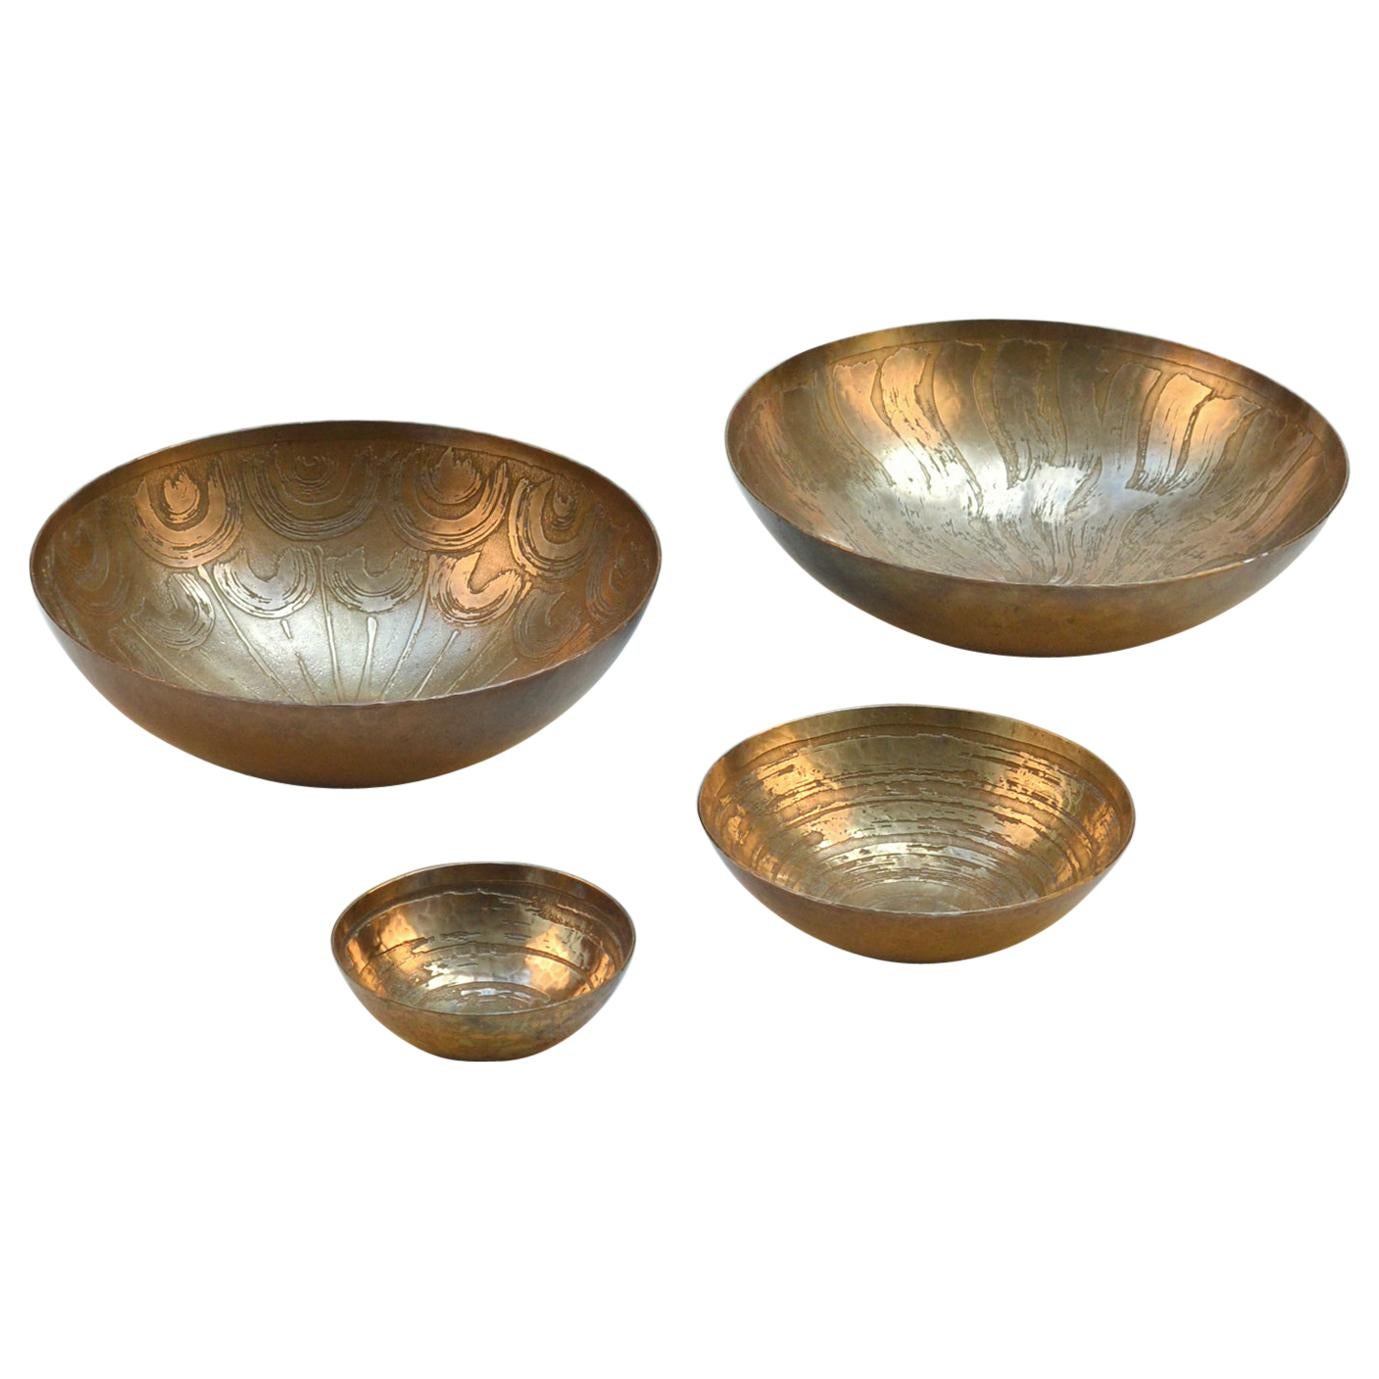 https://a.1stdibscdn.com/four-etched-bronze-bowls-by-michael-harjes-metallkunst-for-sale/1121189/f_233118721619247412580/23311872_master.jpg